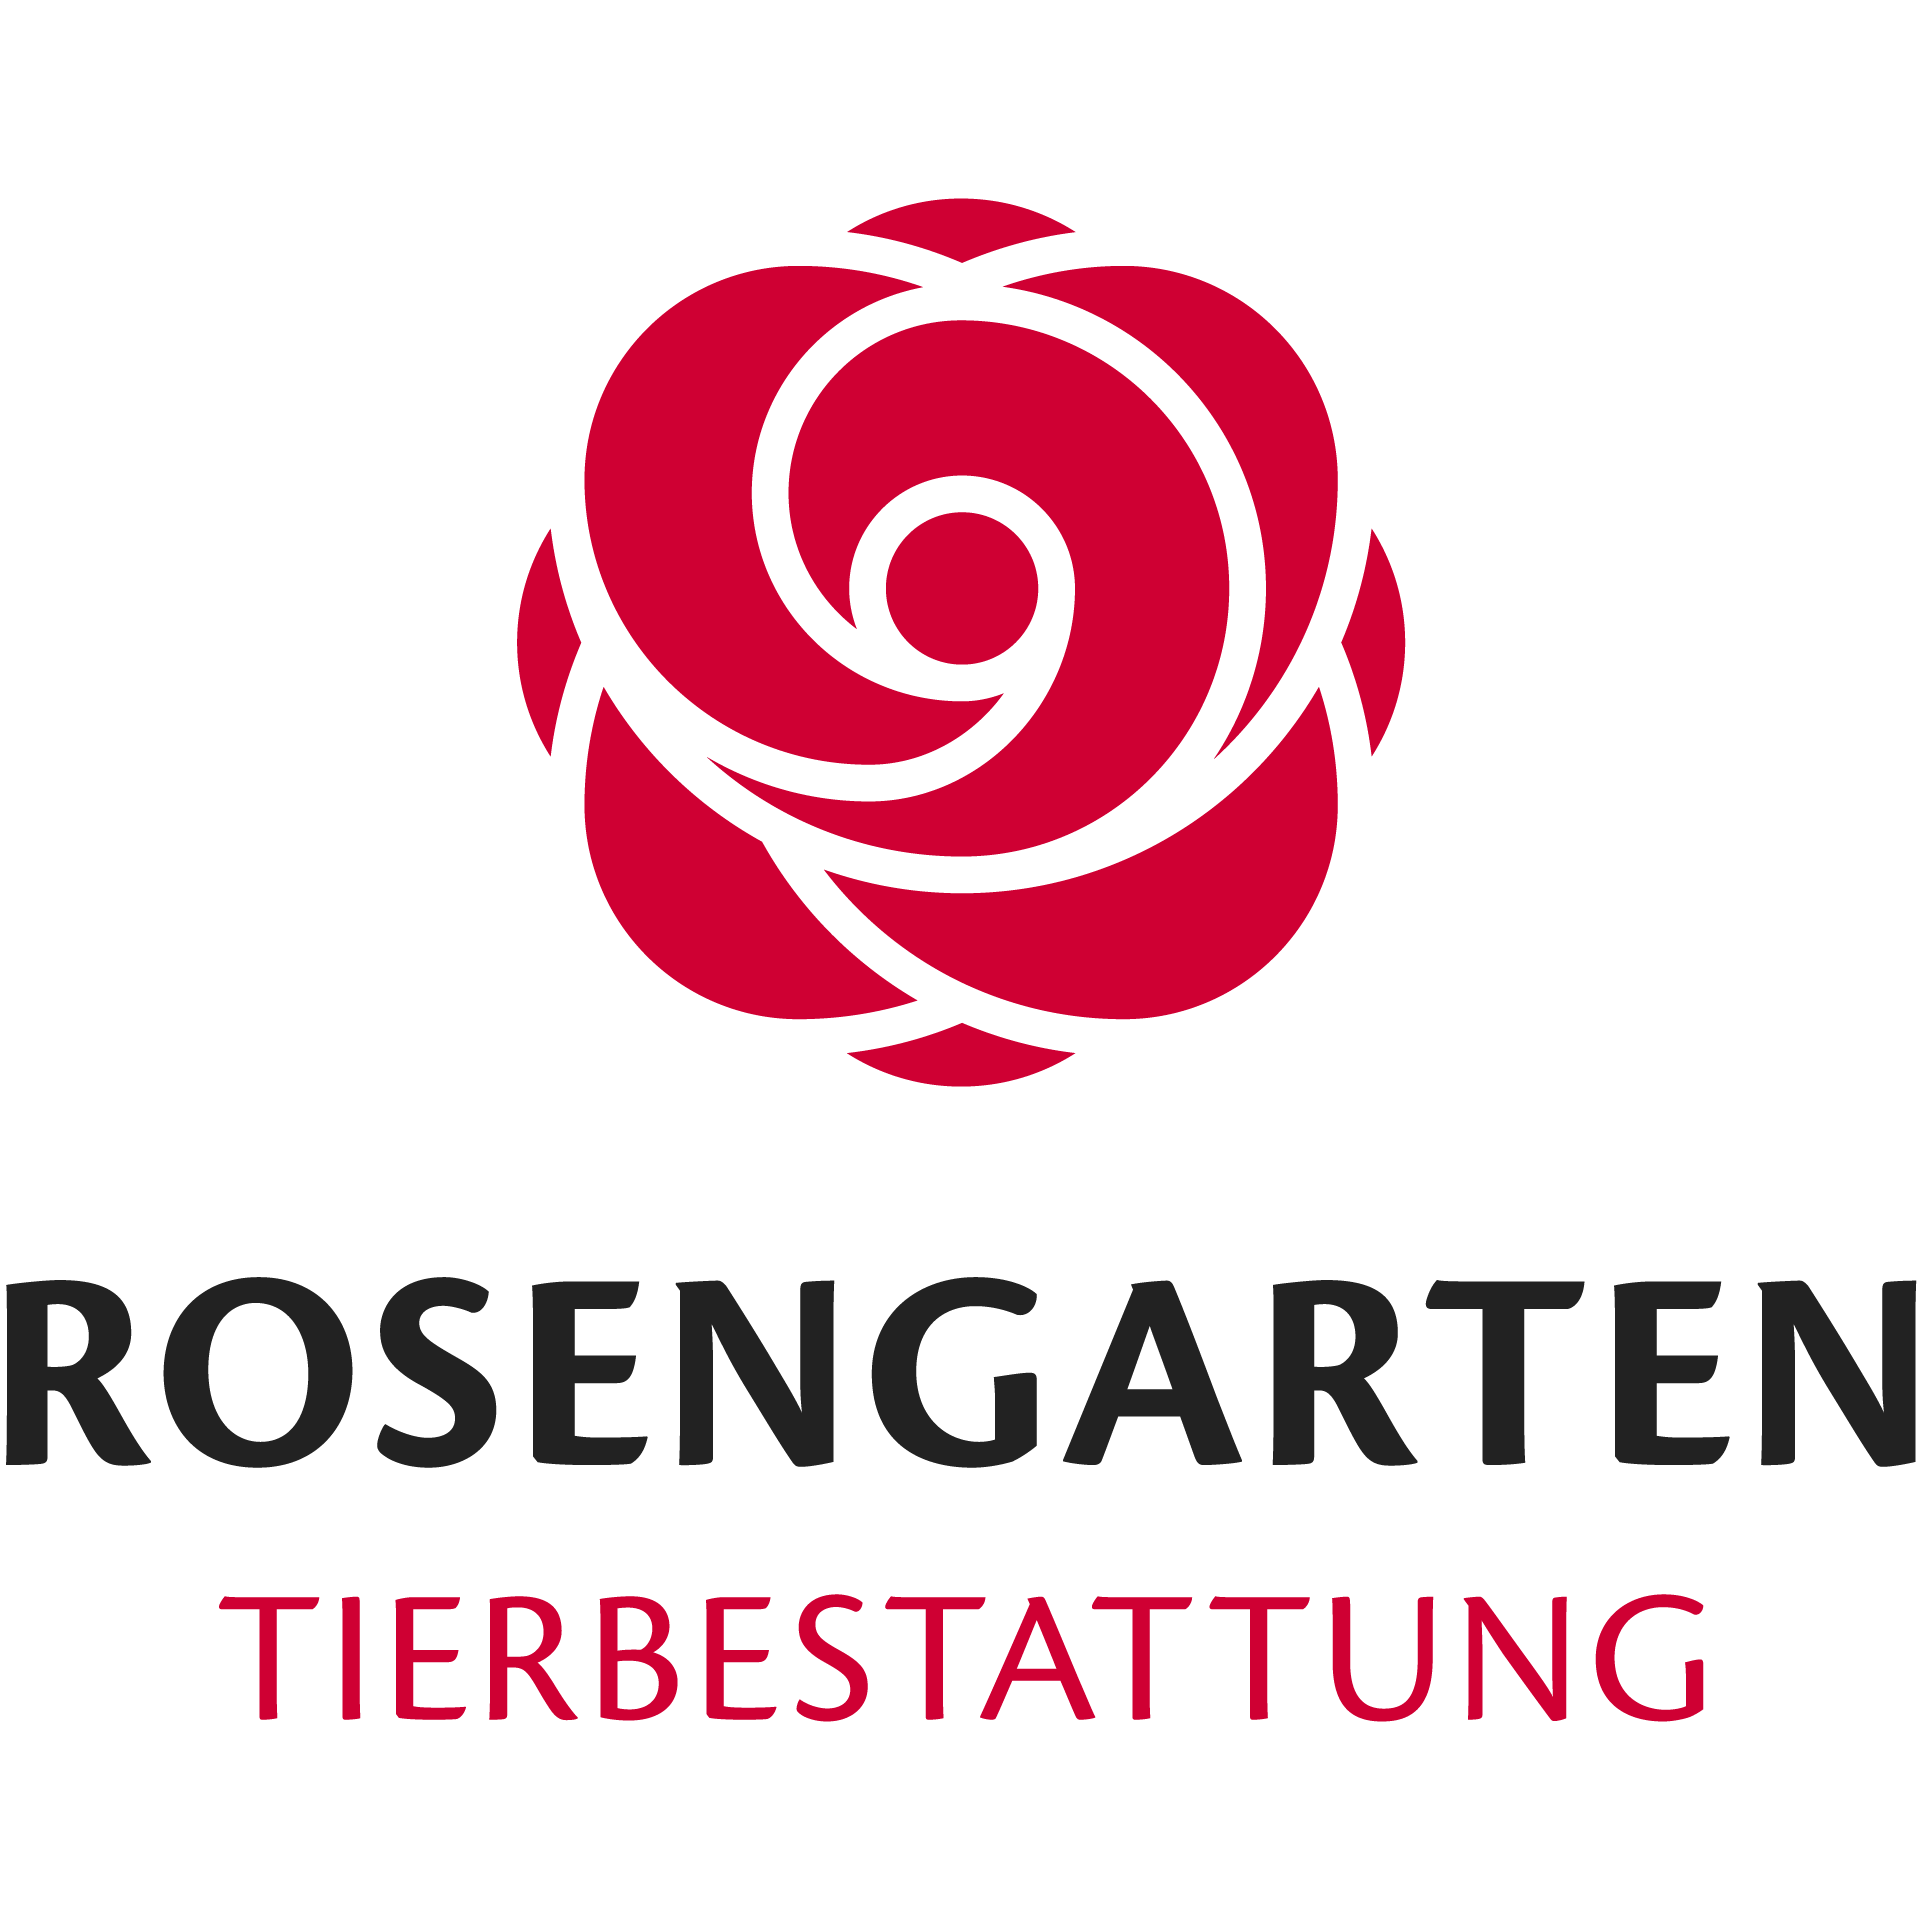 ROSENGARTEN-Tierbestattung Schleswig in Schuby - Logo